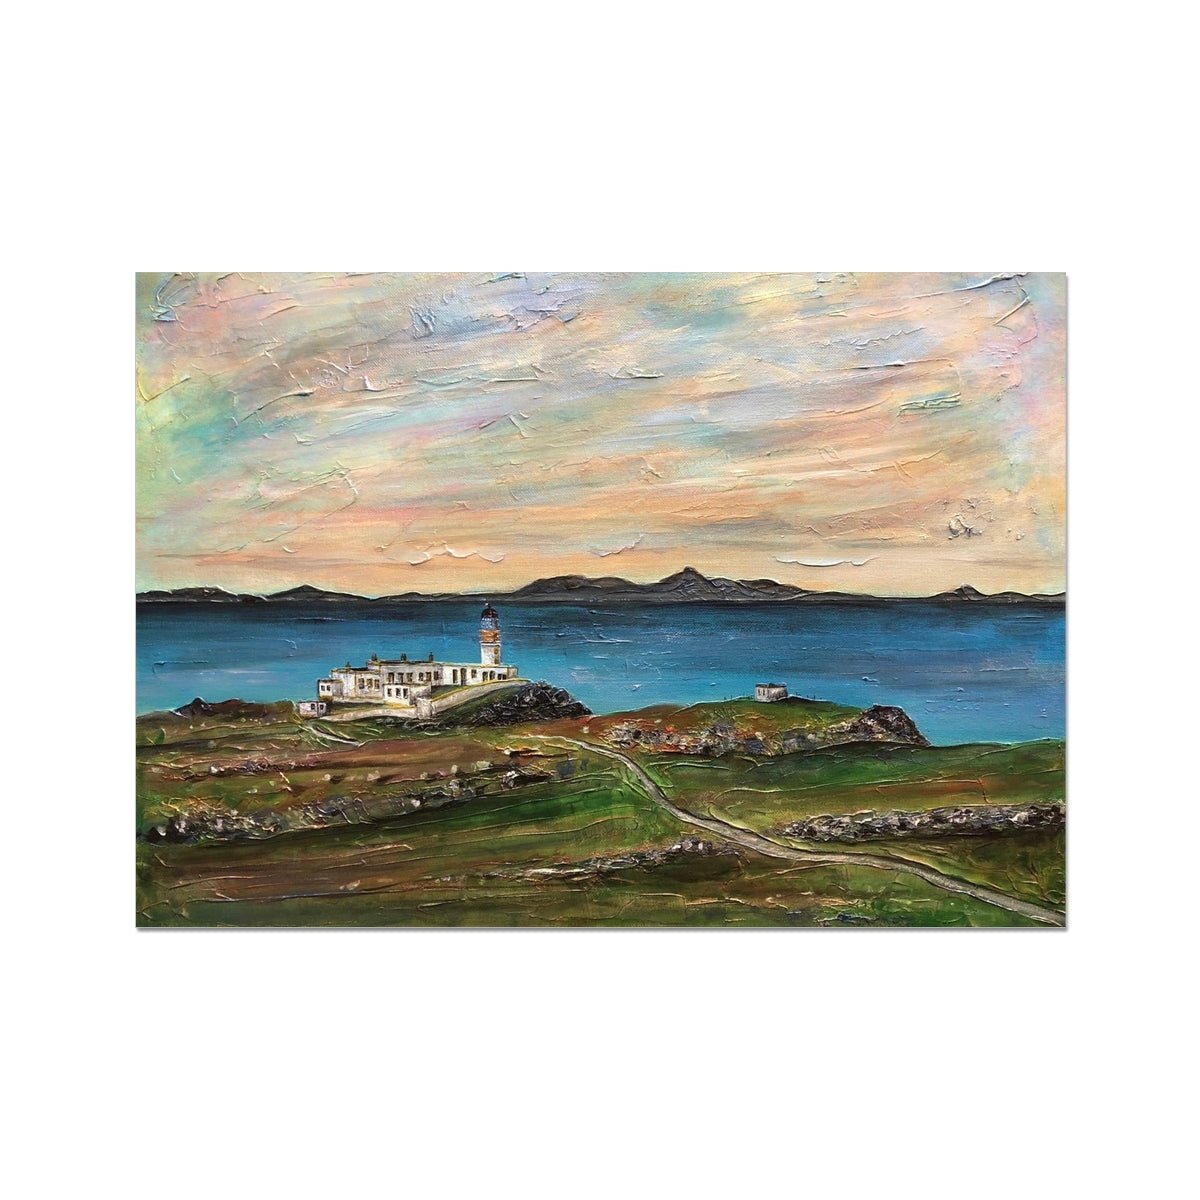 Neist Point Skye Painting | Fine Art Prints From Scotland-Unframed Prints-Skye Art Gallery-A2 Landscape-Paintings, Prints, Homeware, Art Gifts From Scotland By Scottish Artist Kevin Hunter